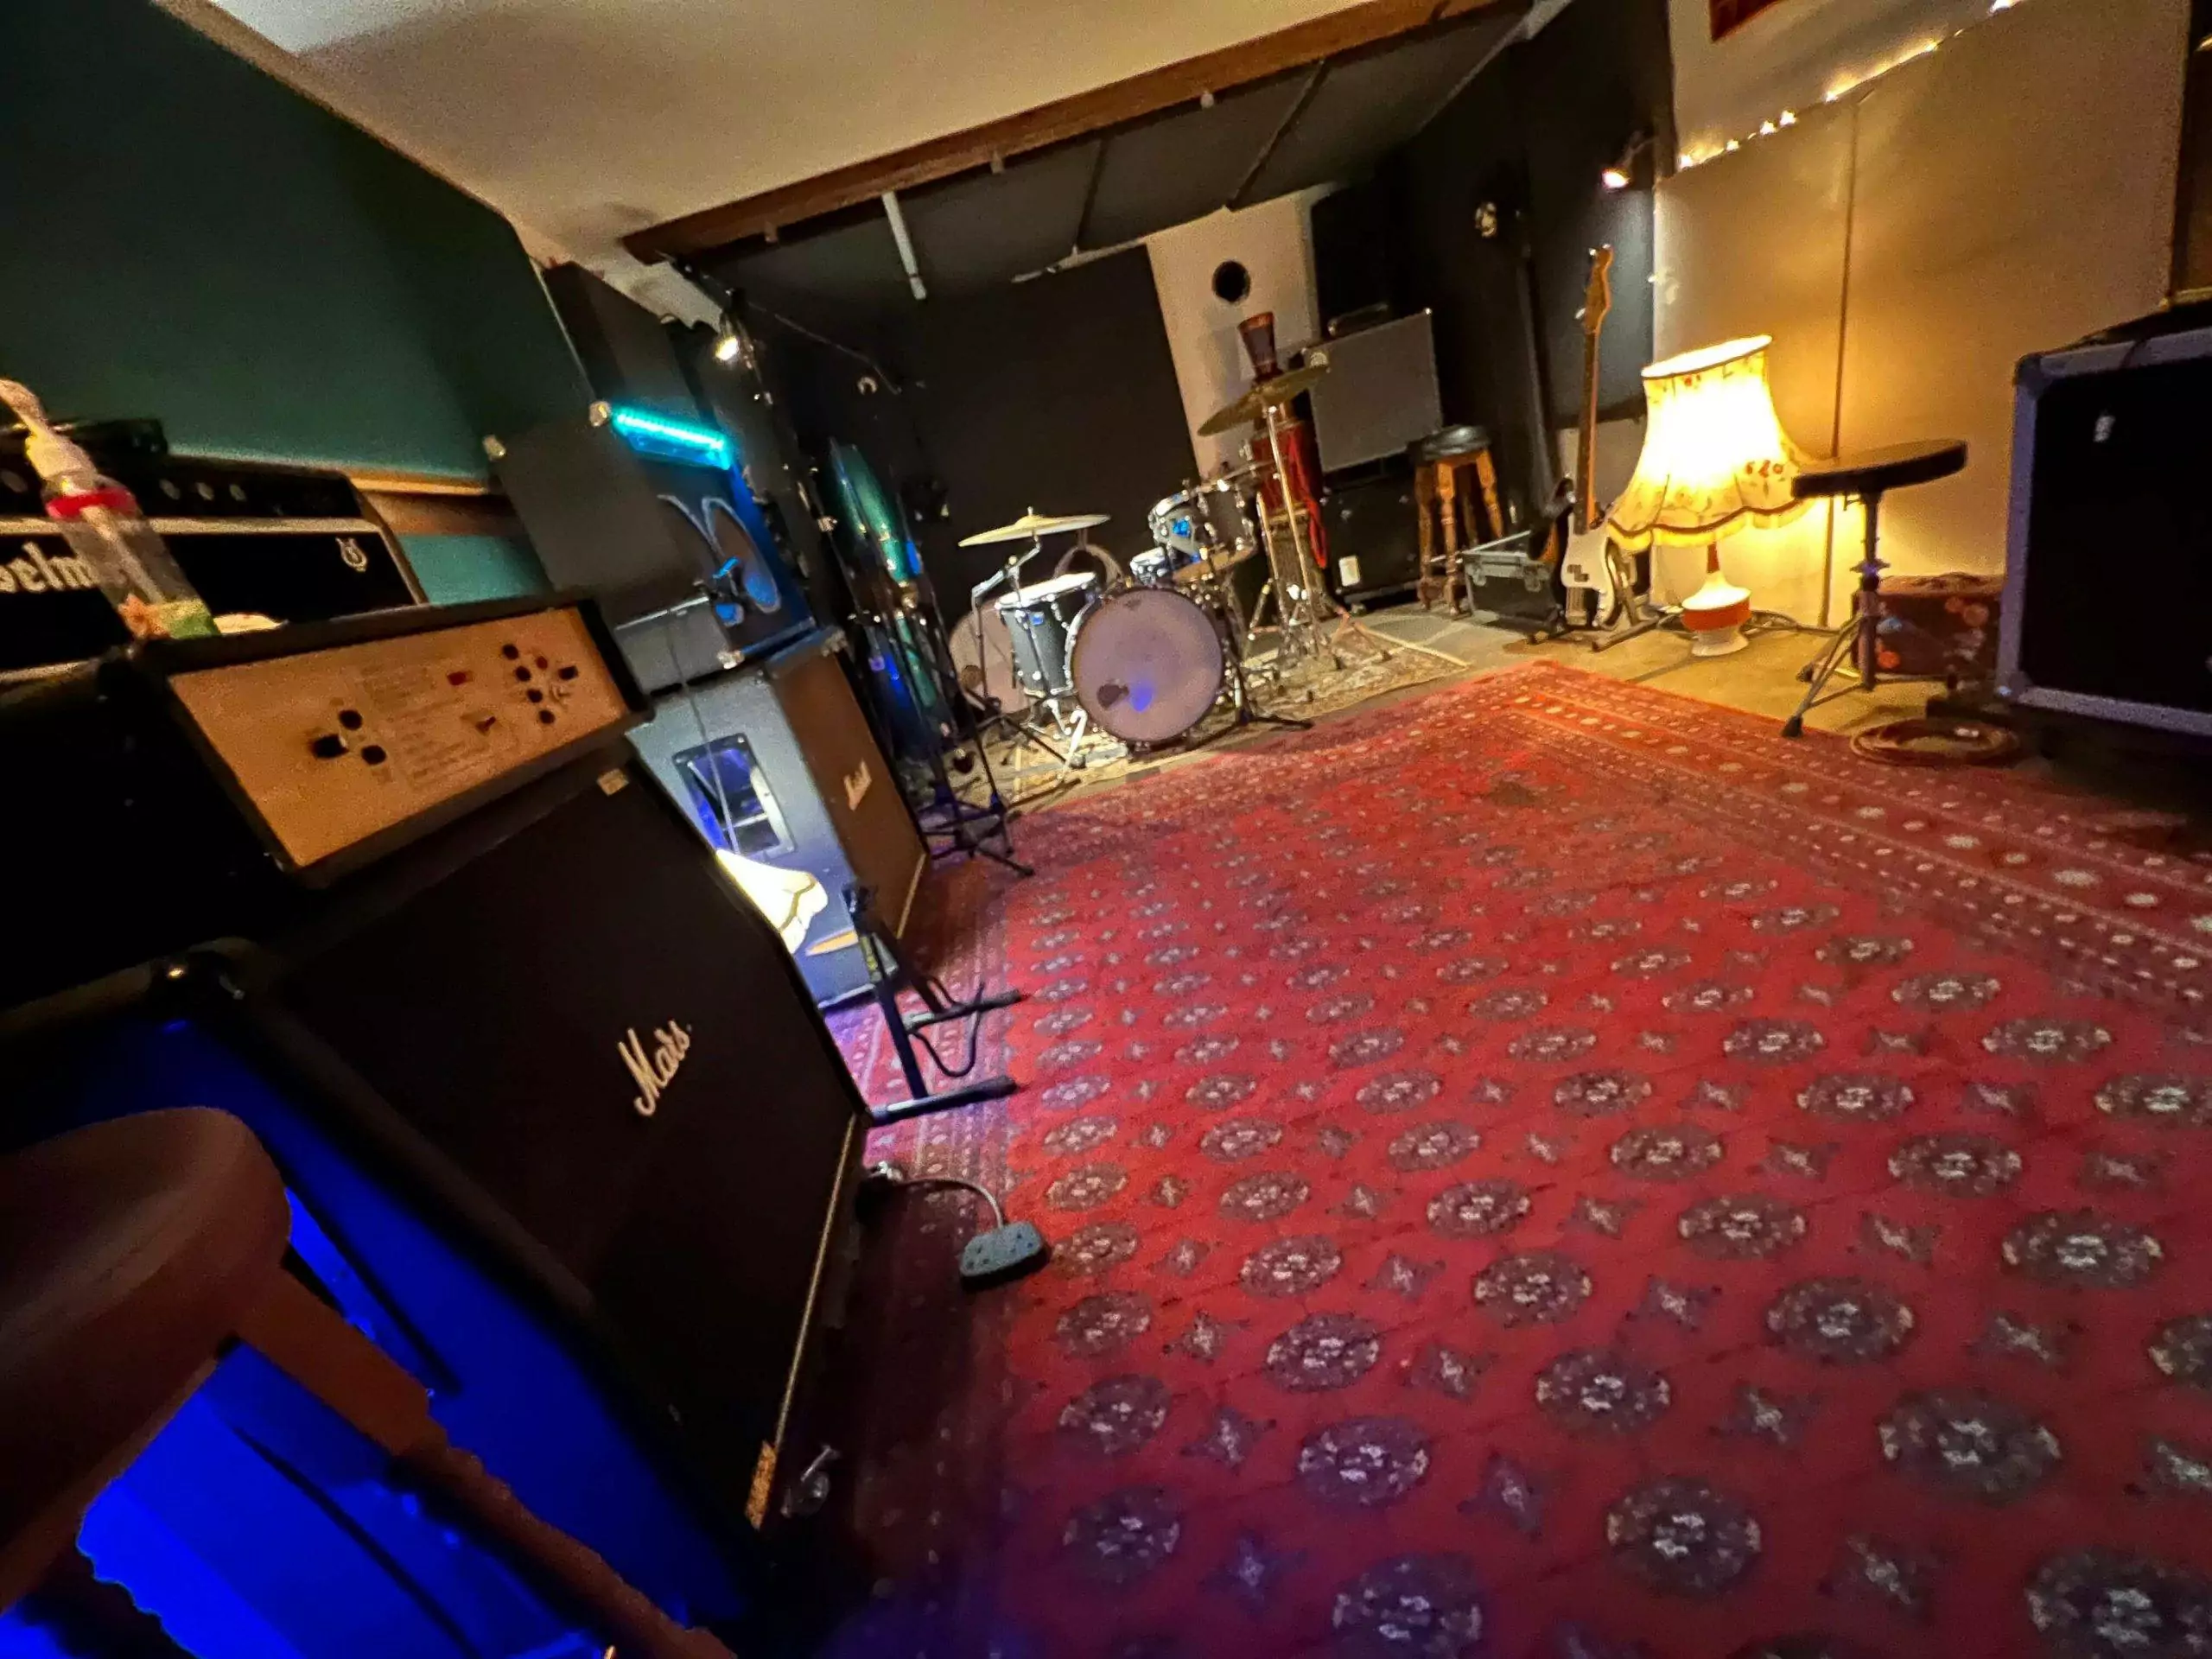 Rehearsal Studio